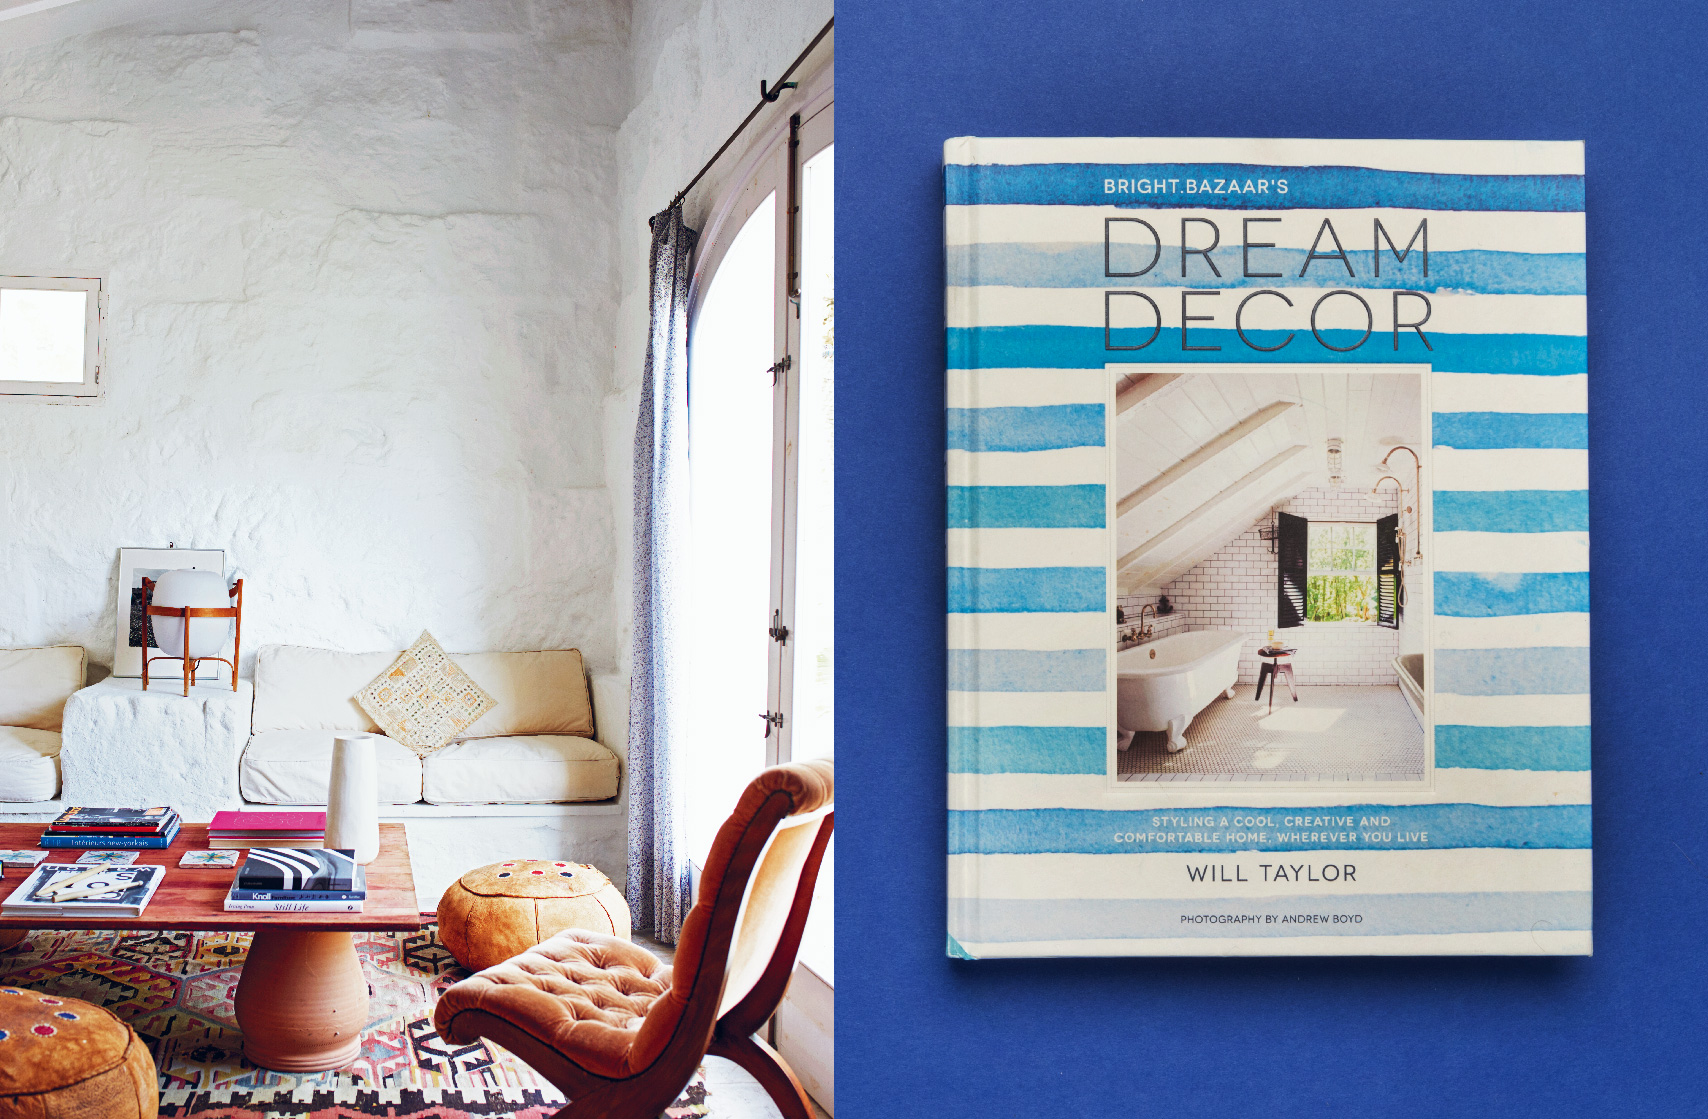 Dream Decor book by Will Taylor via happymundane.com